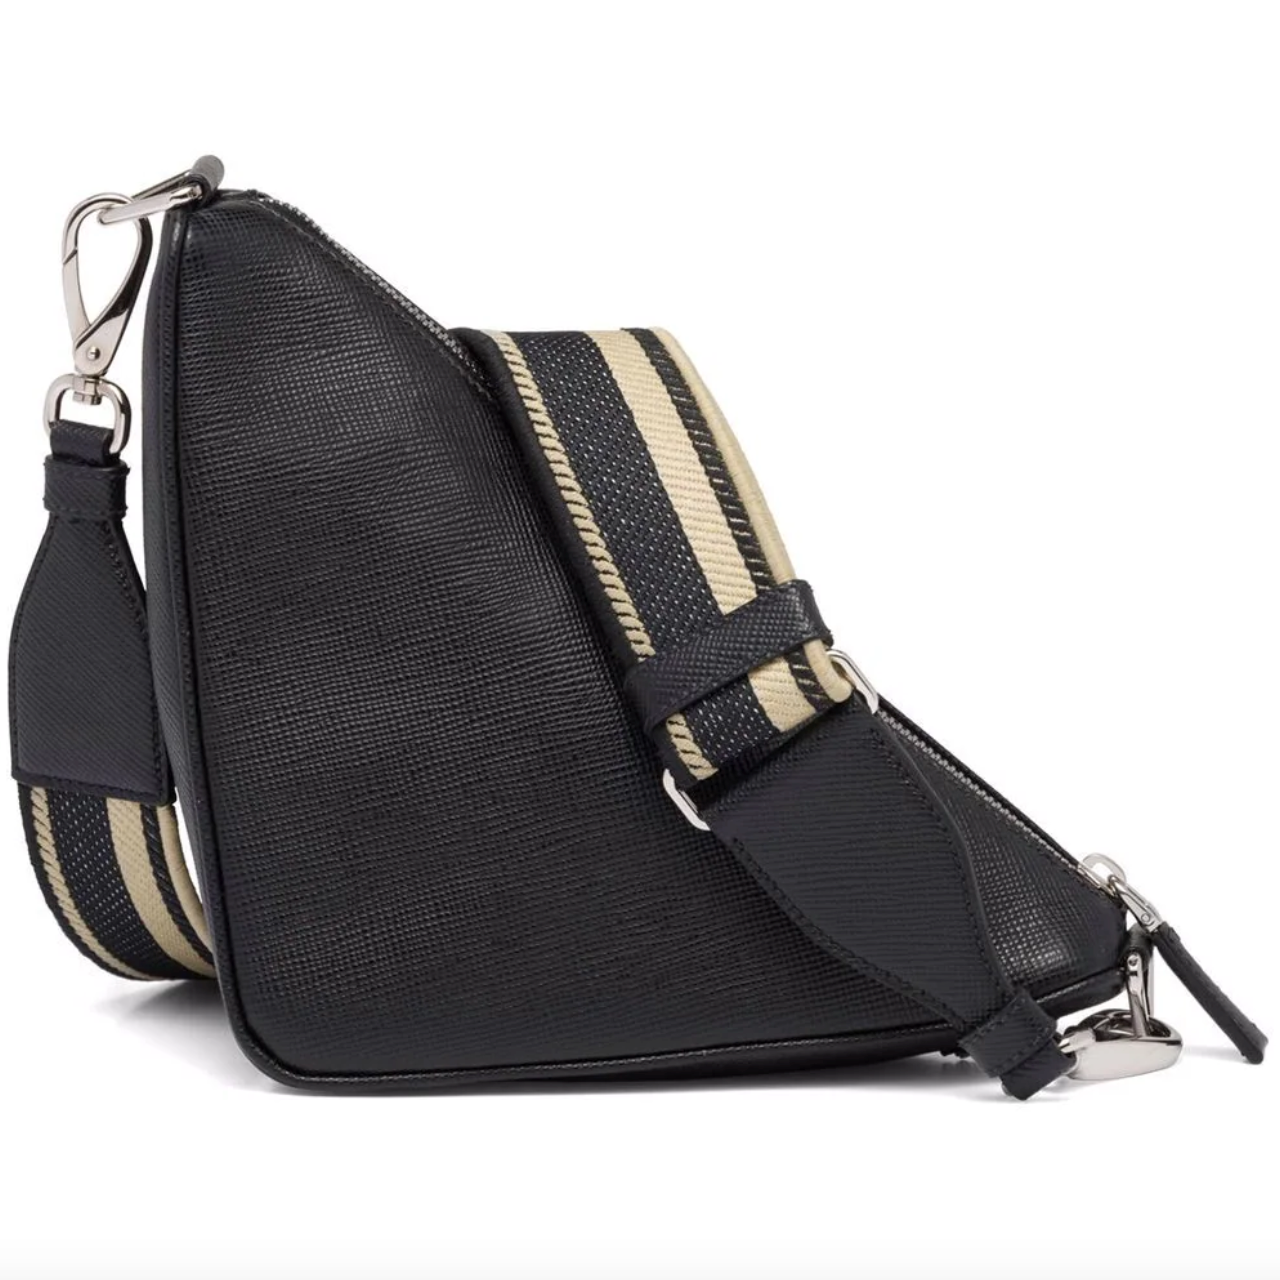 PRADA Detachable Strap Crossbody Bags & Handbags for Women